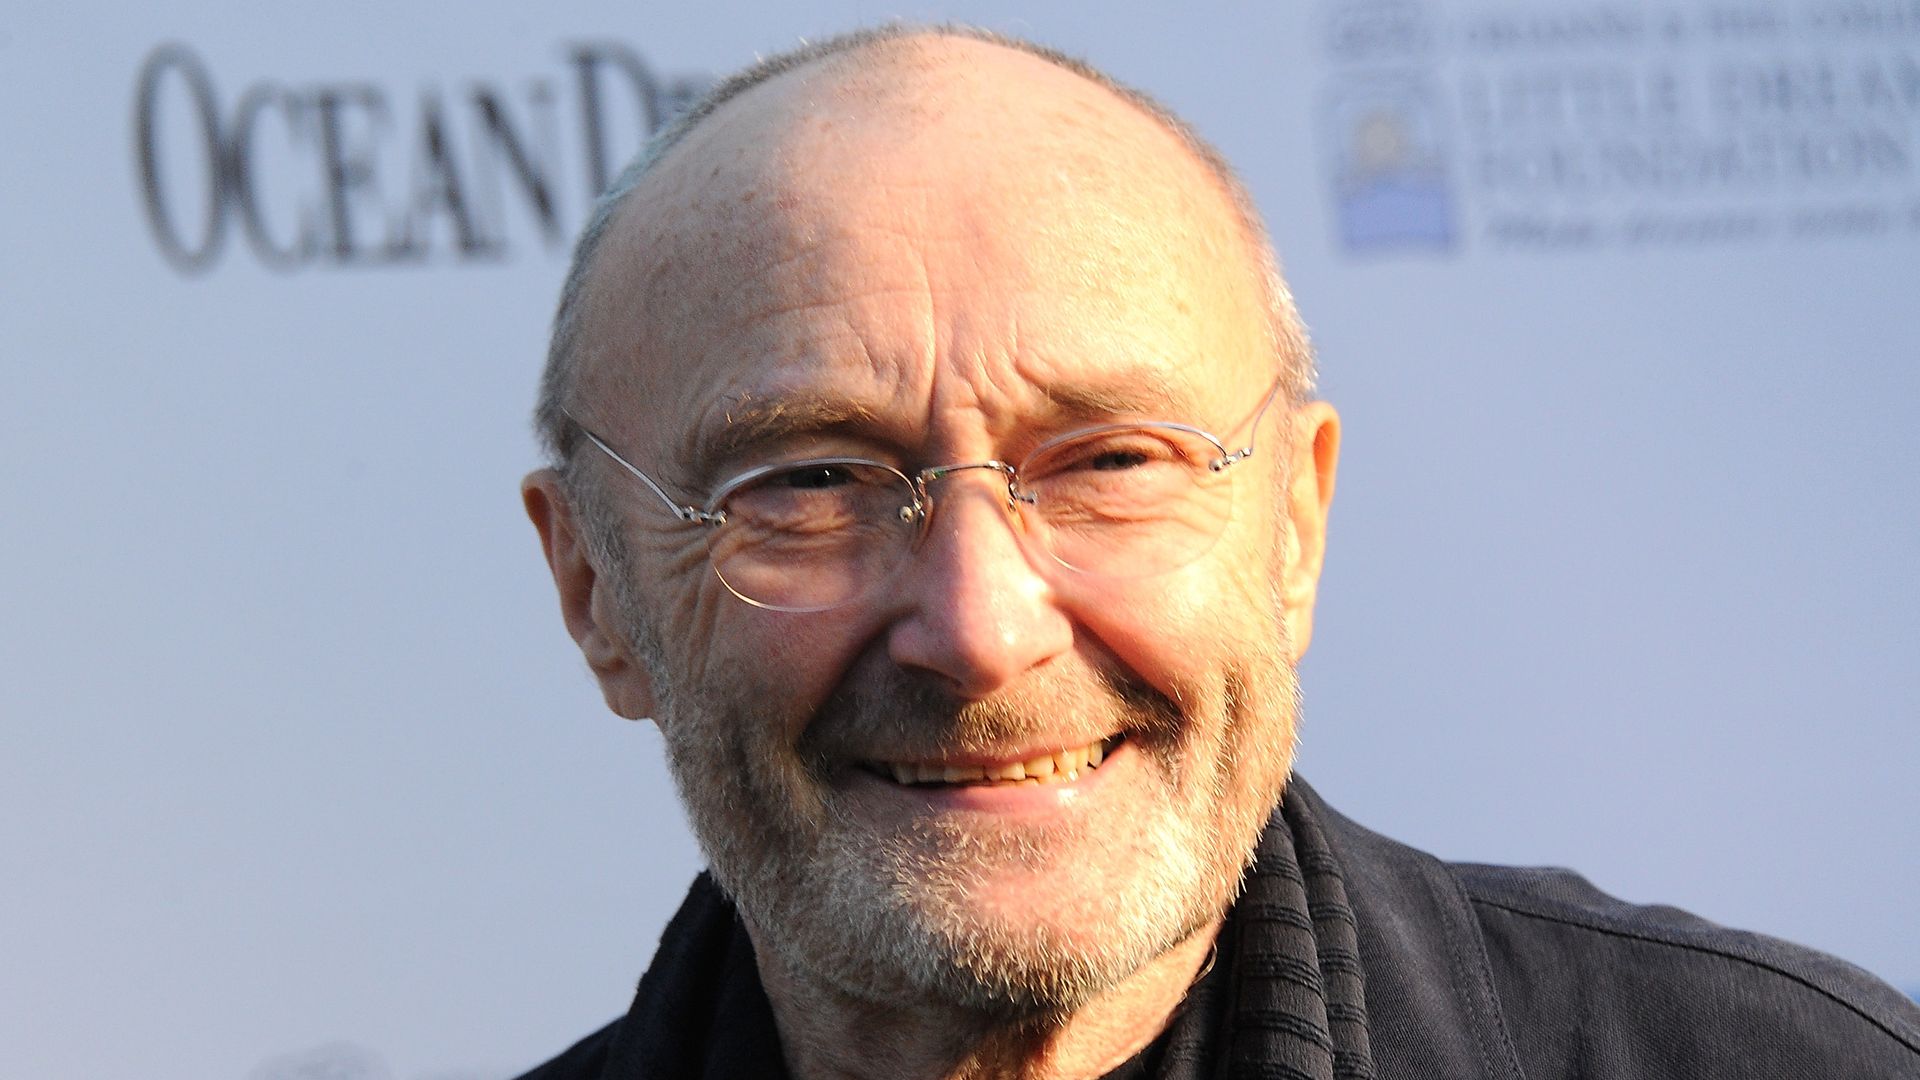 Singer and drummer Phil Collins smiling